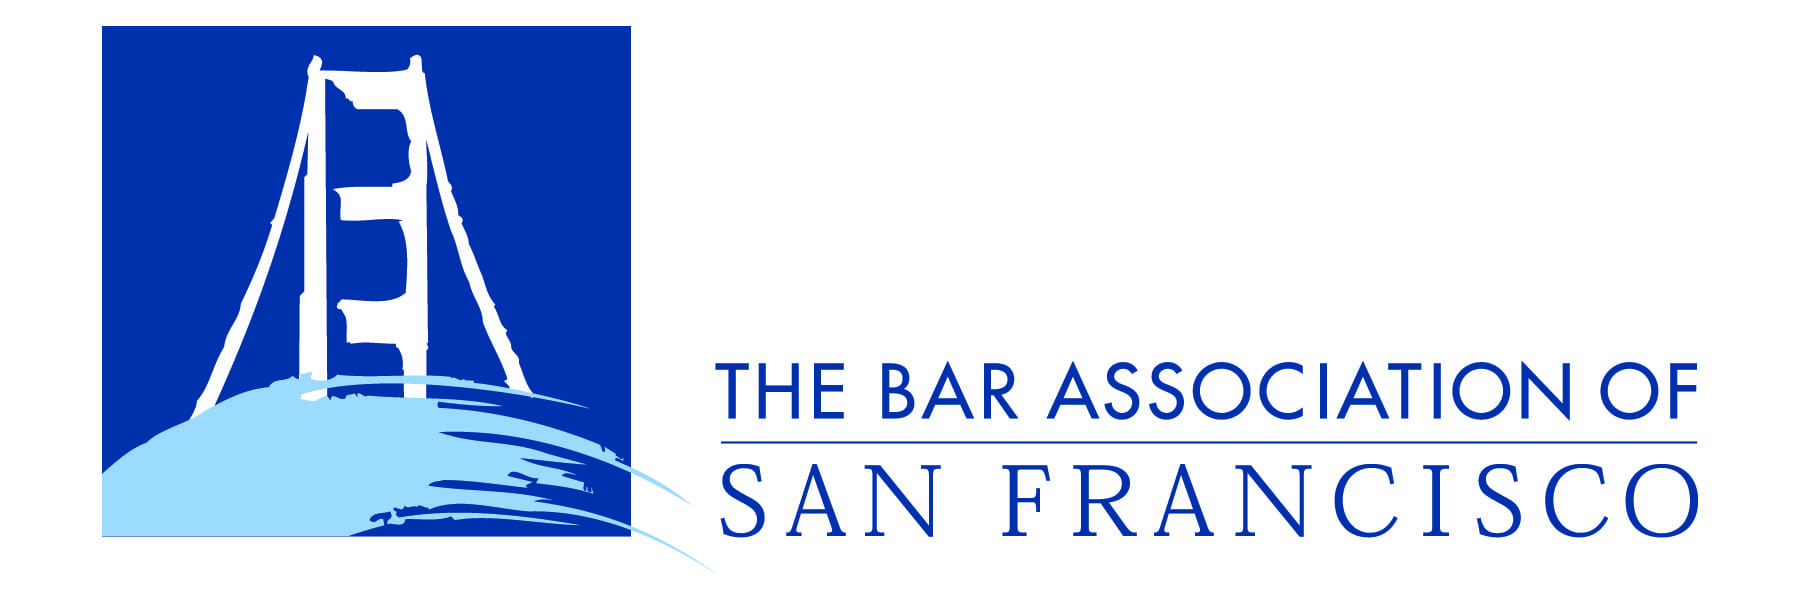 The bar association of San Francisco